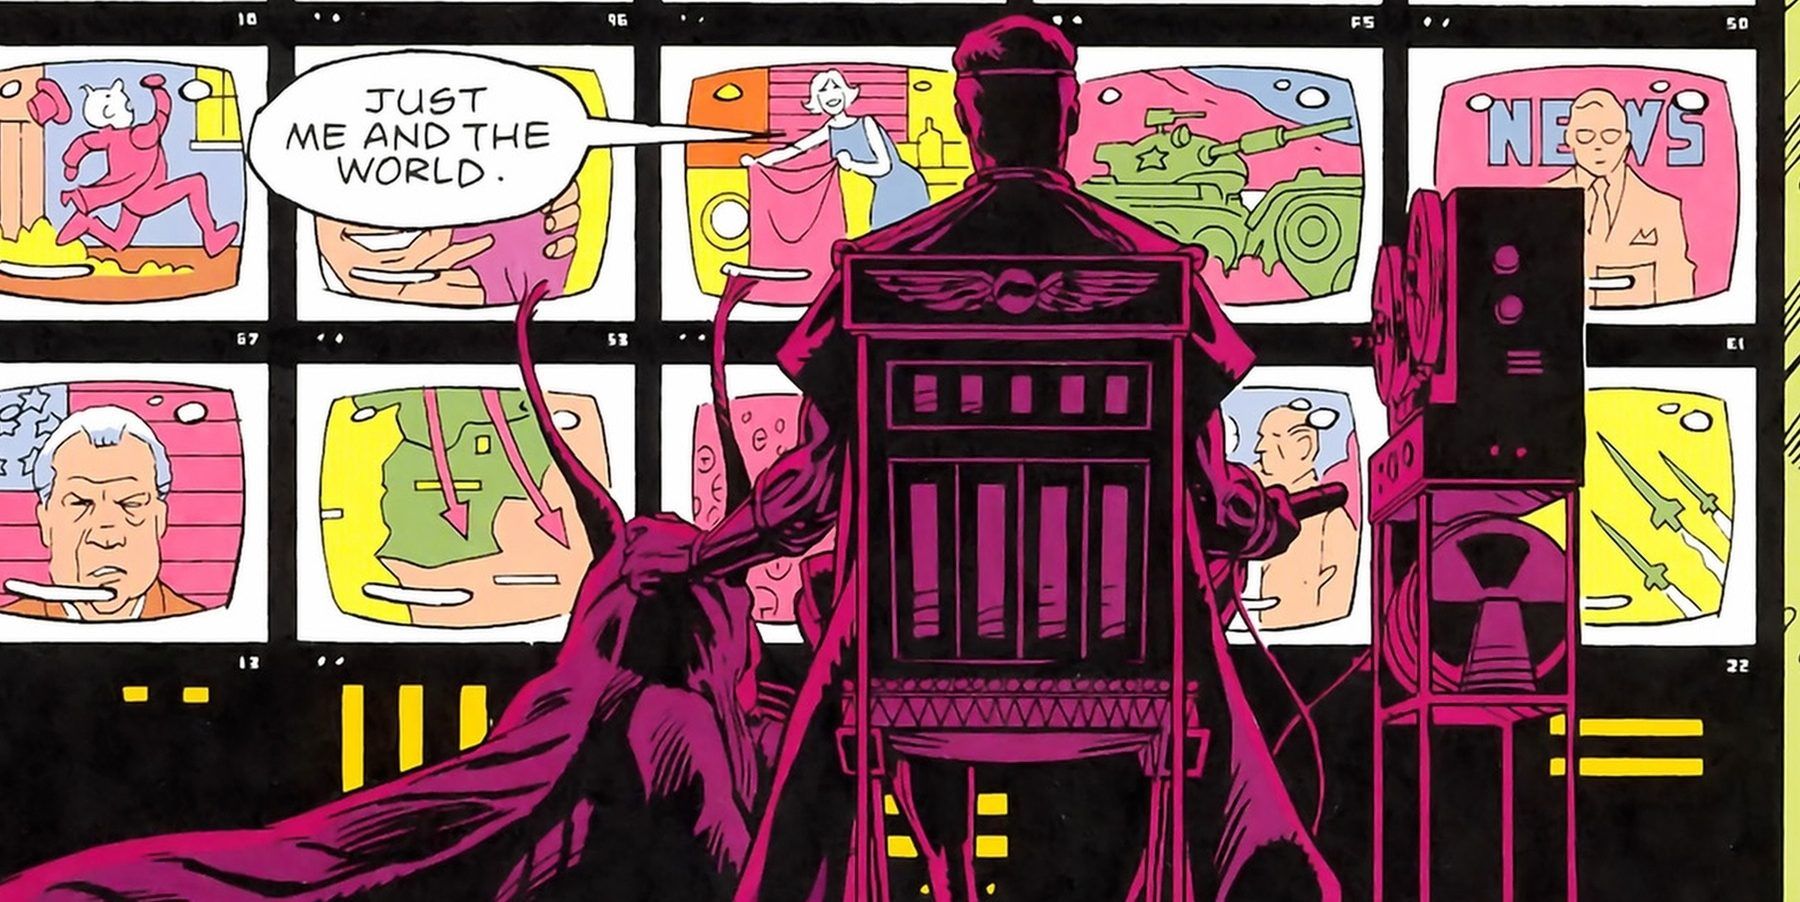 Doomsday Clock #10 Homages a Classic Watchmen Scene | CBR1800 x 902